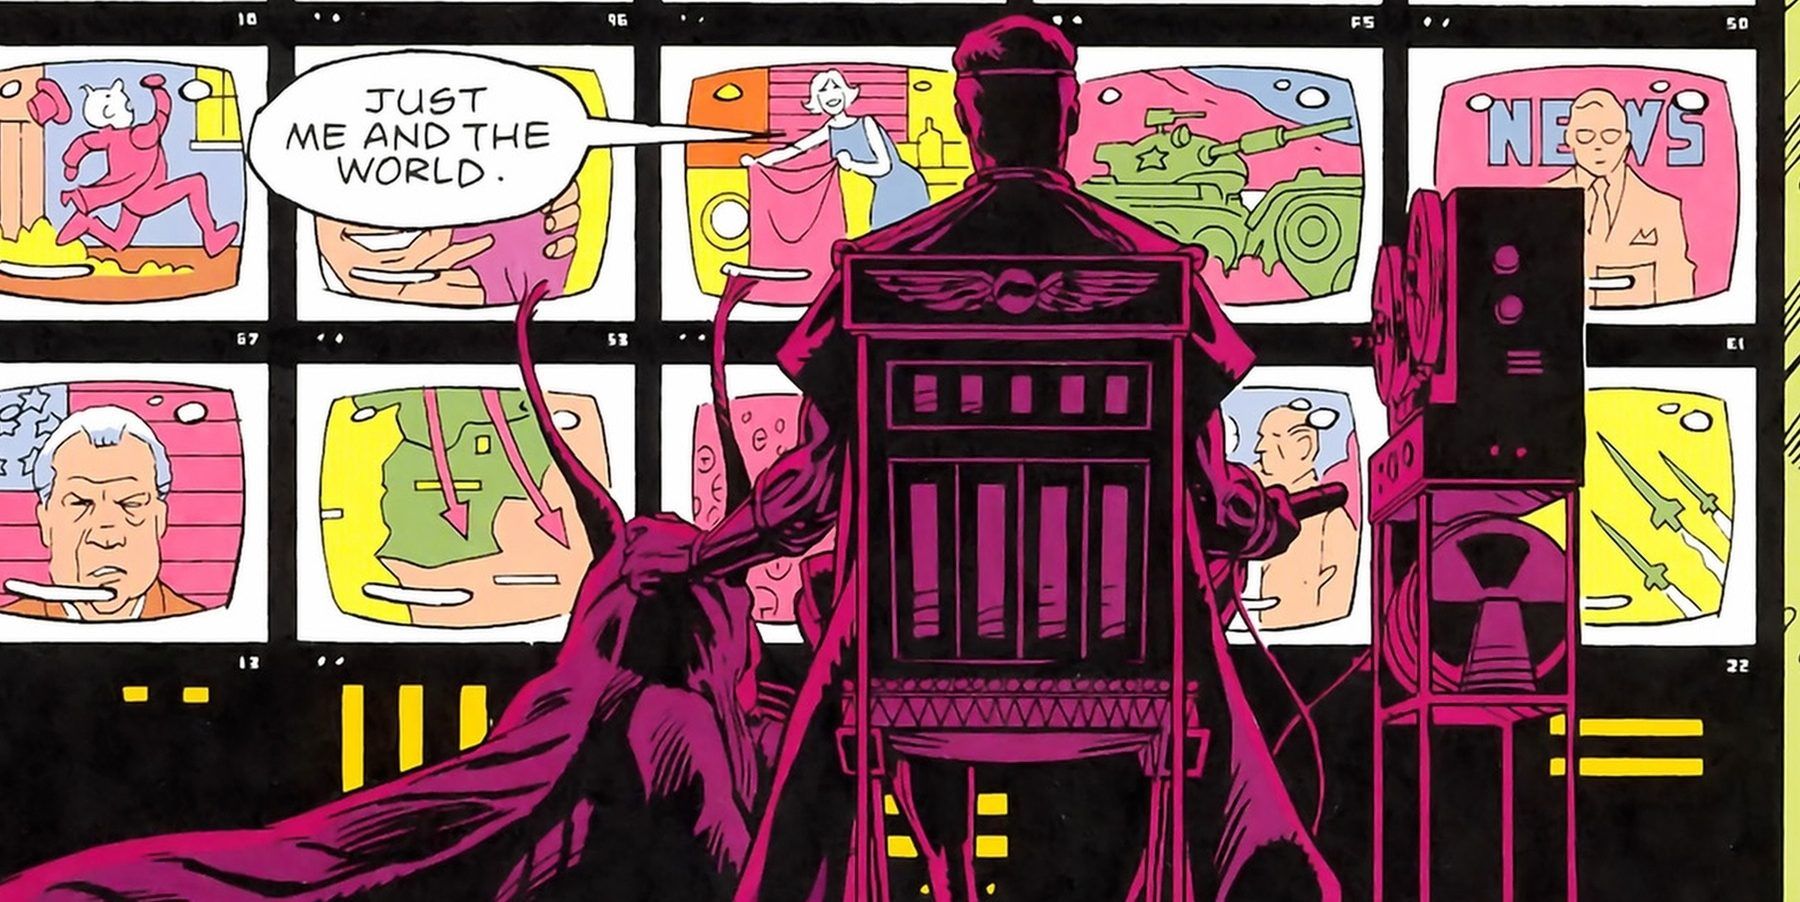 Doomsday Clock #10 Homages a Classic Watchmen Scene | CBR1800 x 902